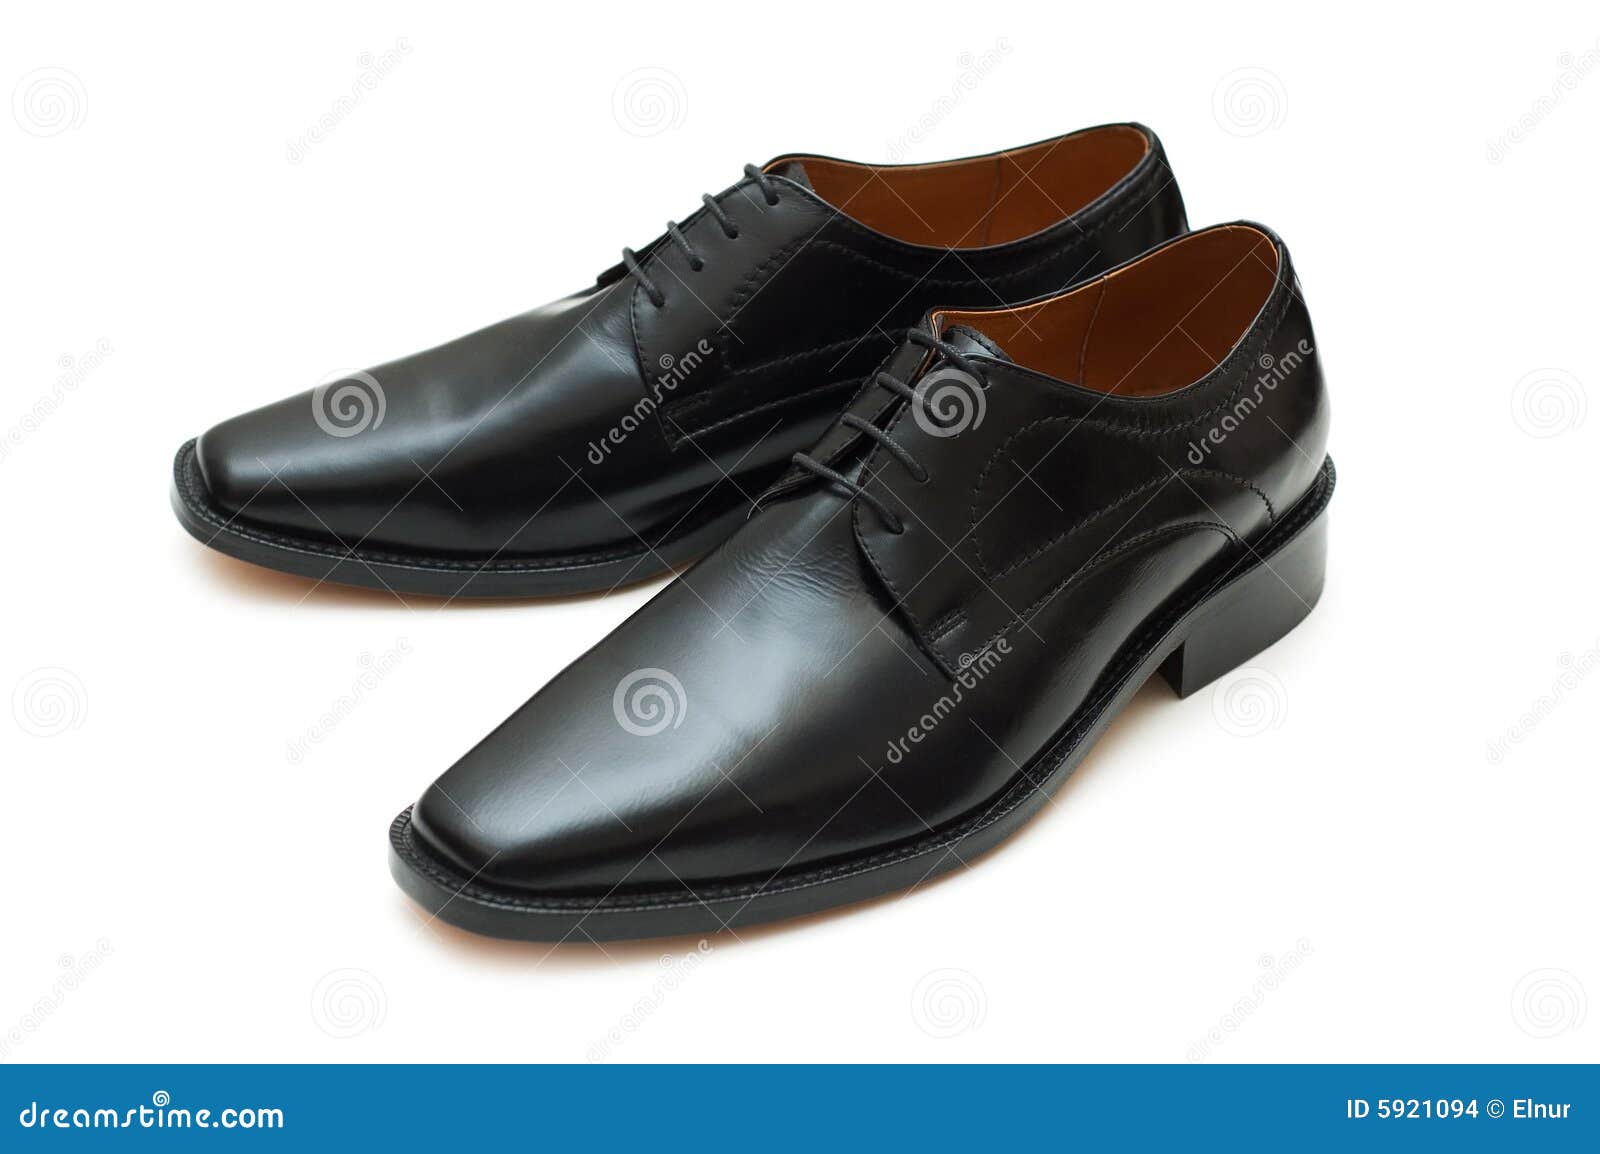 Black Shoes Isolated on the White Background Stock Photo - Image of ...